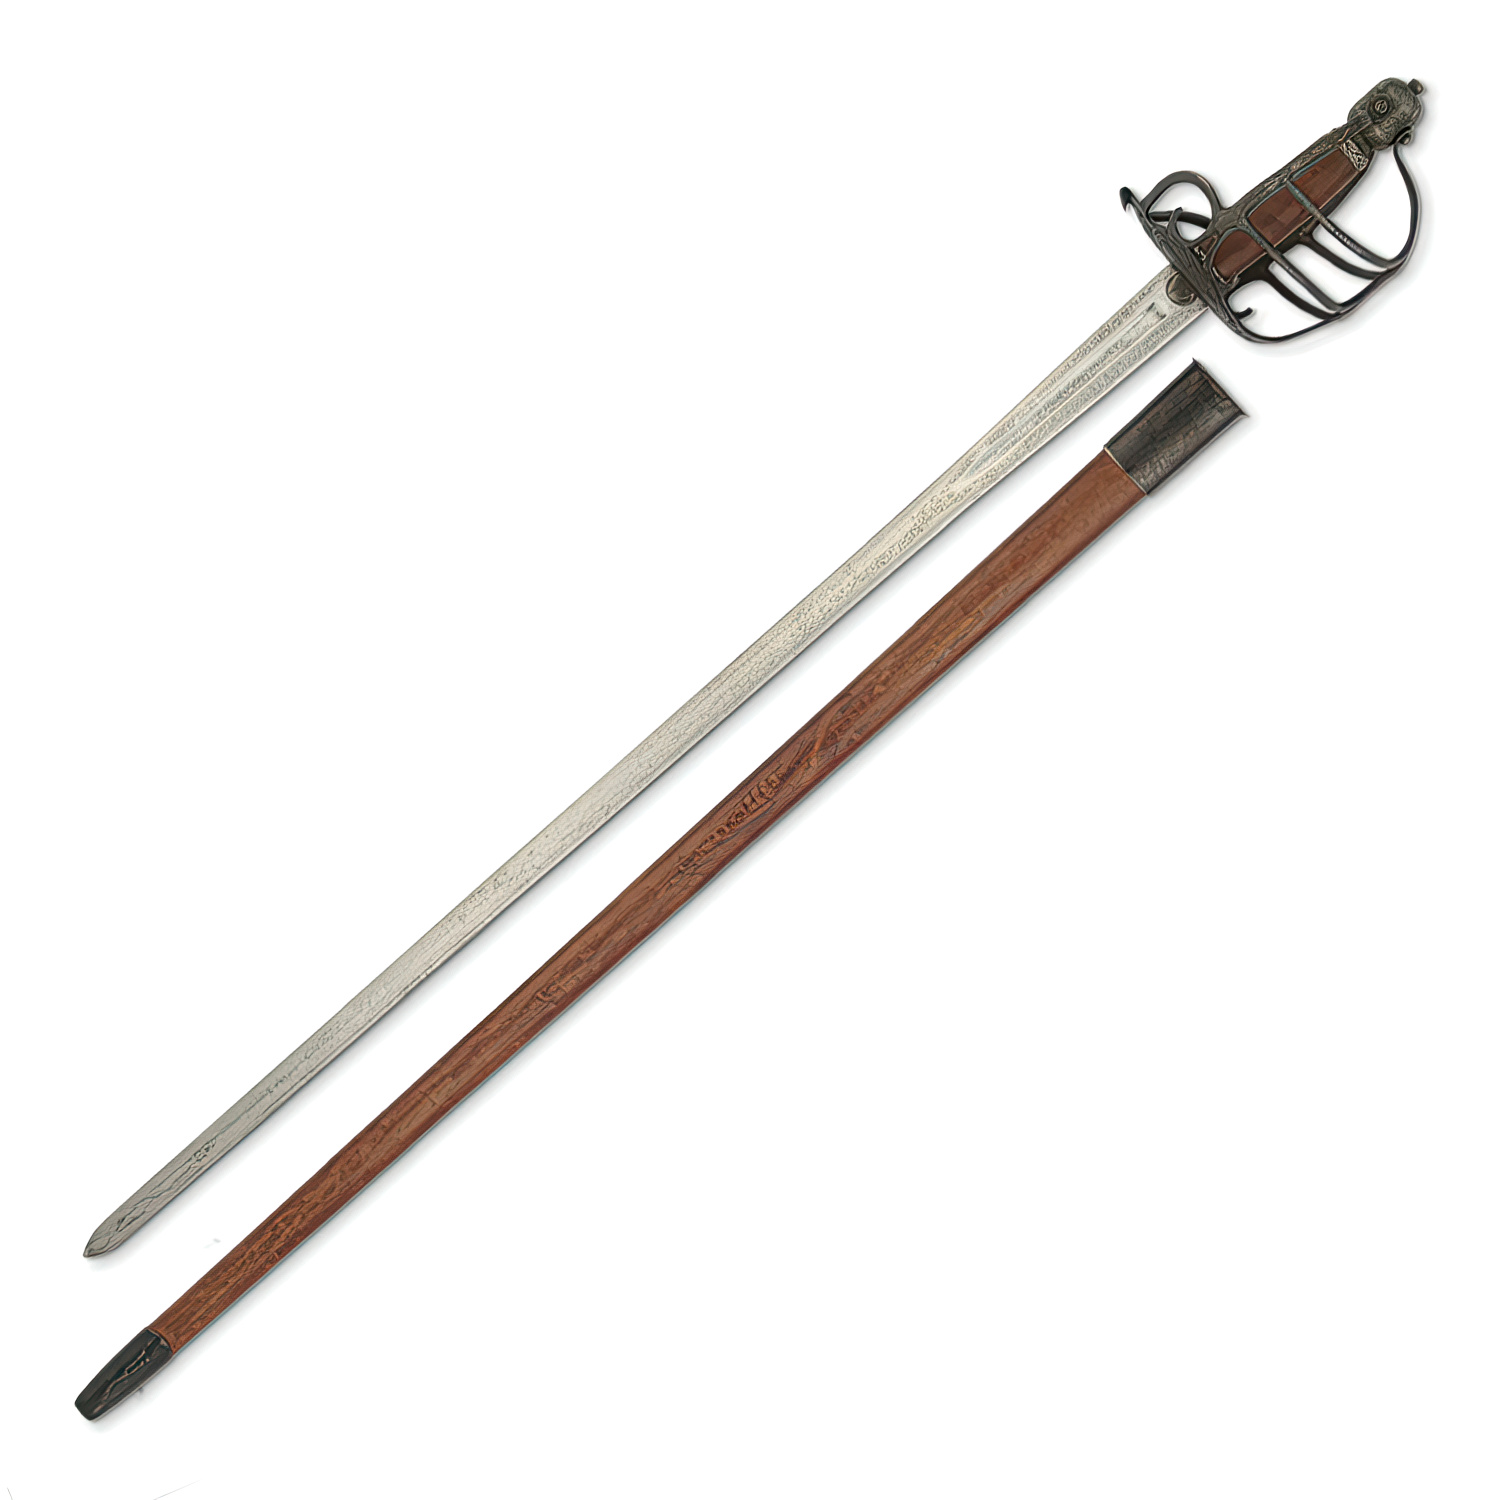 Hanwei English Civil War Sword 17th Century